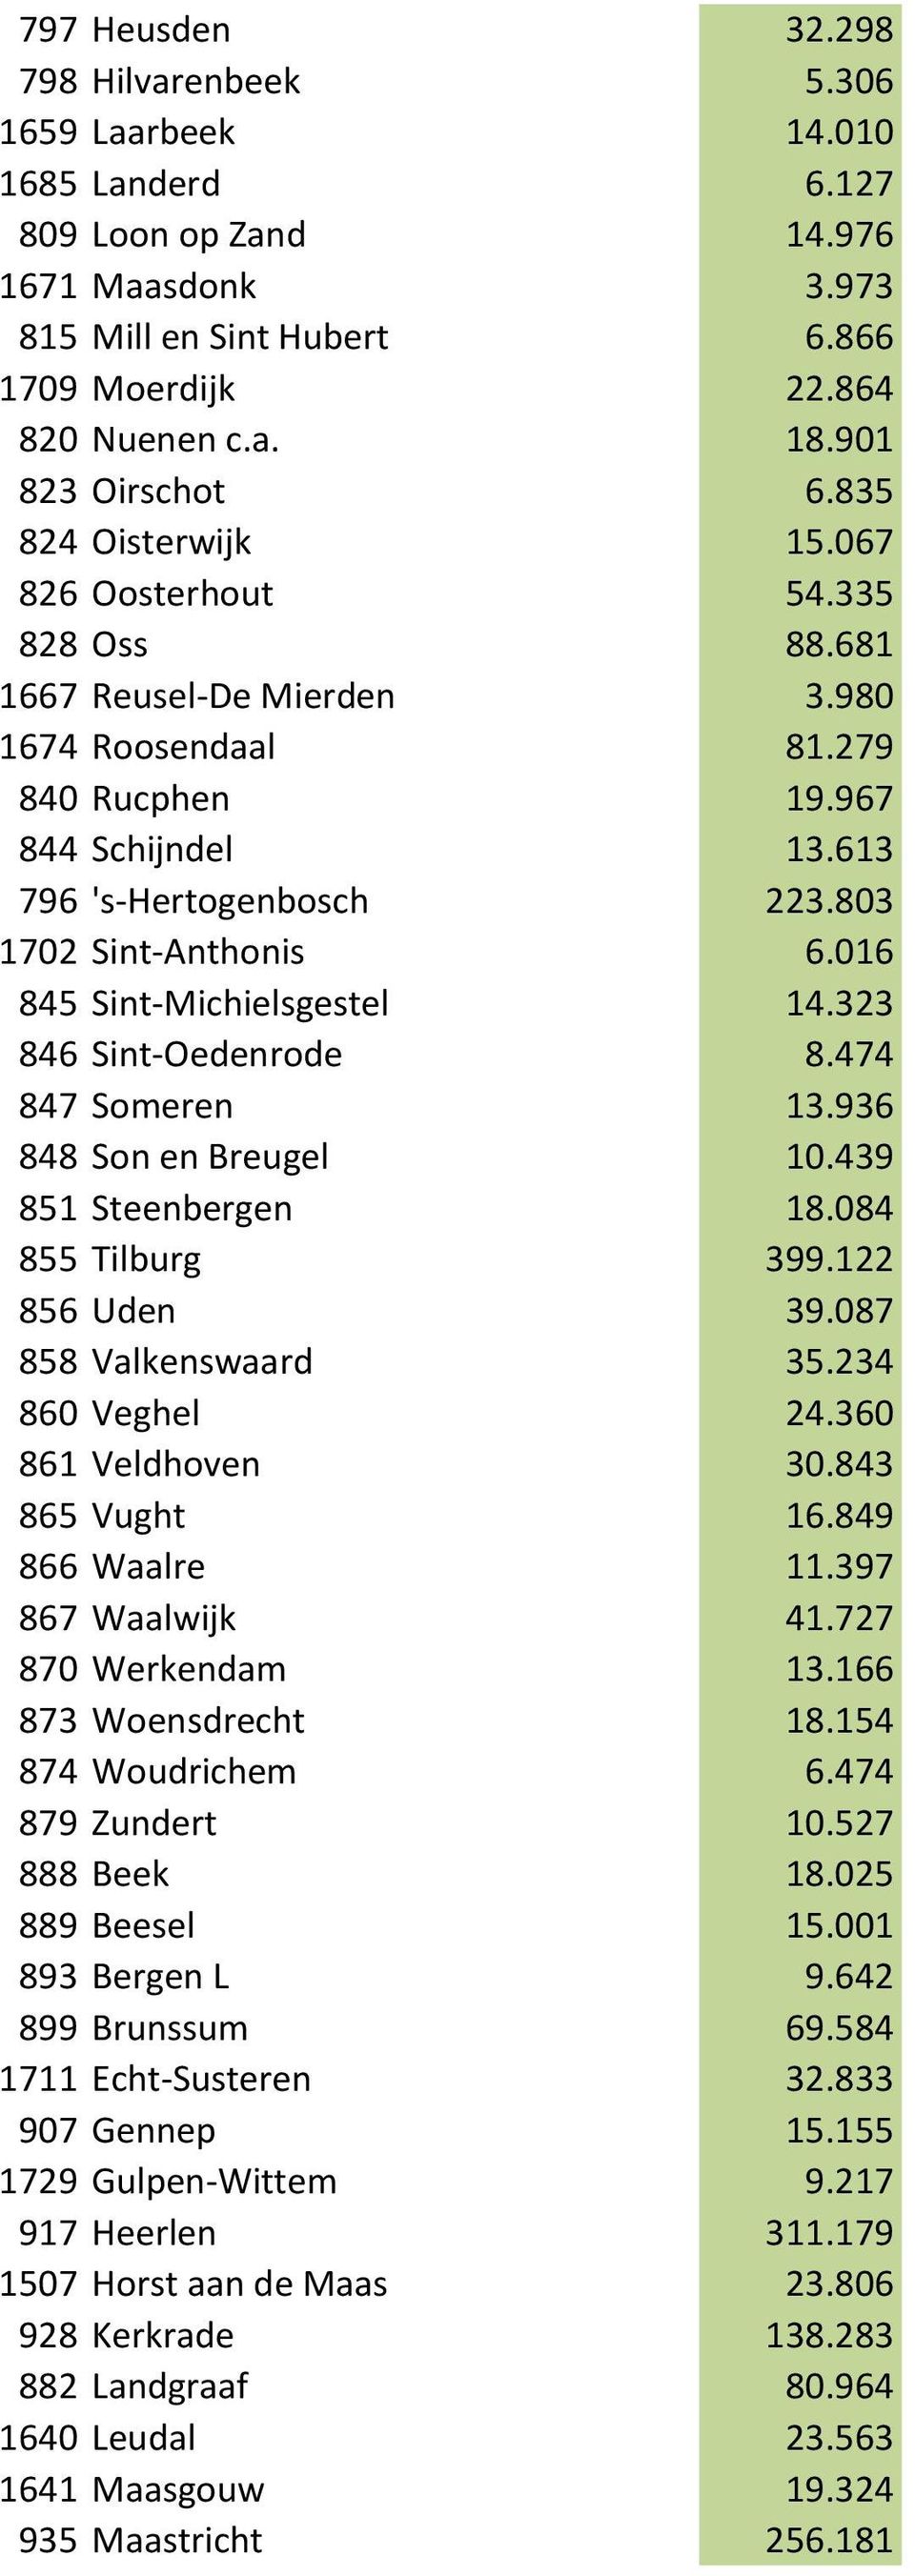 803 1702 Sint-Anthonis 6.016 845 Sint-Michielsgestel 14.323 846 Sint-Oedenrode 8.474 847 Someren 13.936 848 Son en Breugel 10.439 851 Steenbergen 18.084 855 Tilburg 399.122 856 Uden 39.